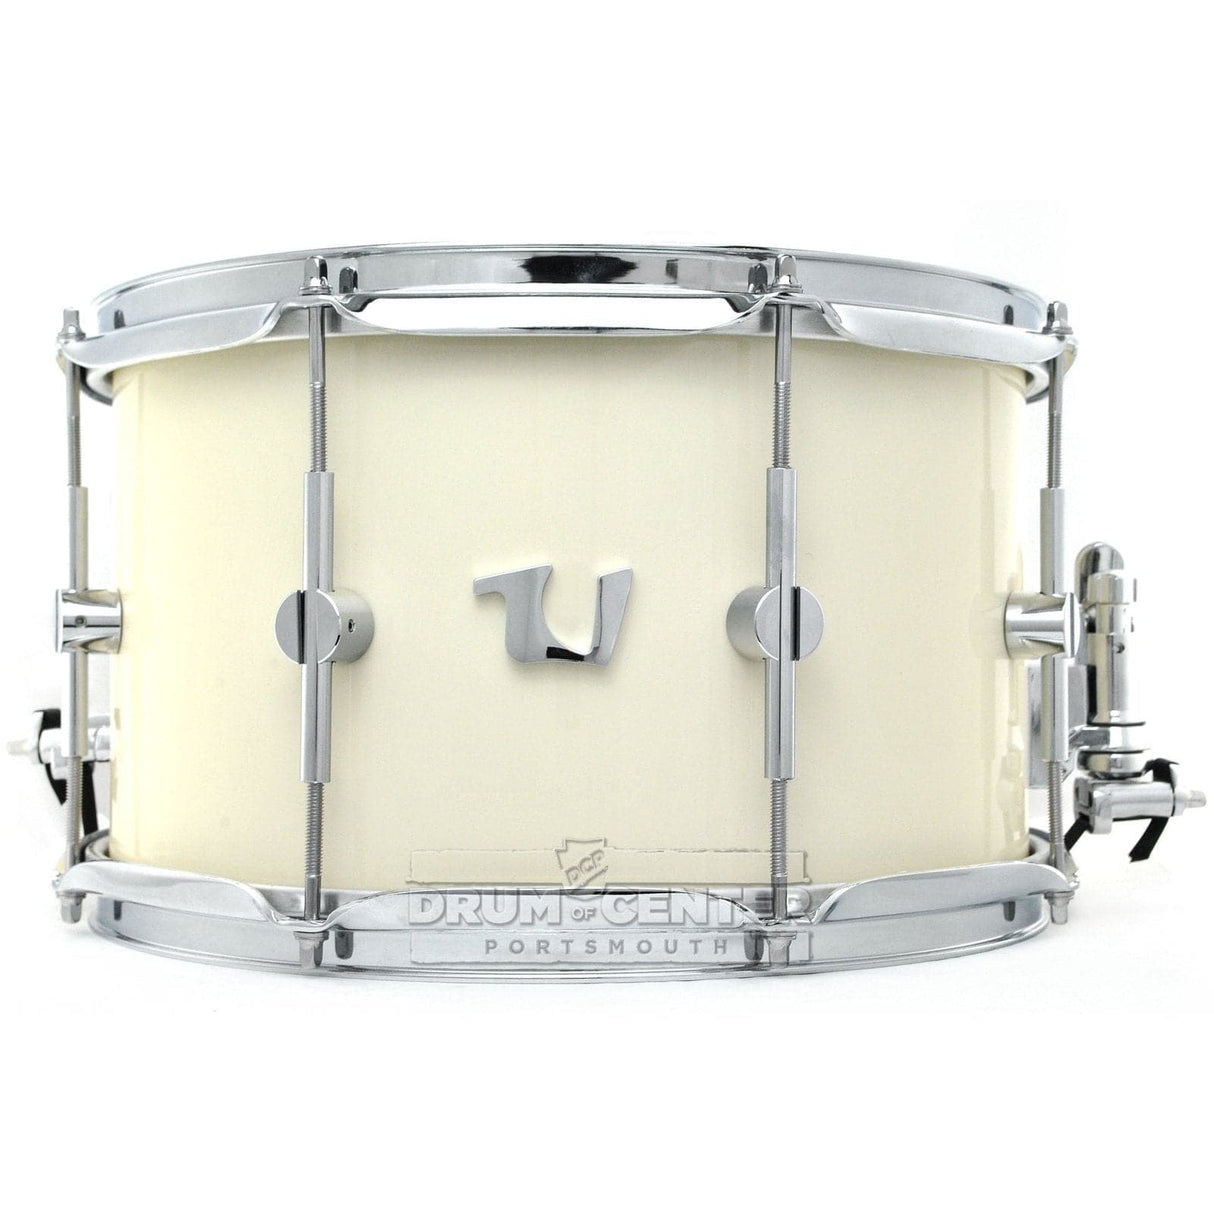 Unix Drums Stave Maple Snare Drum 13x8 Antique White